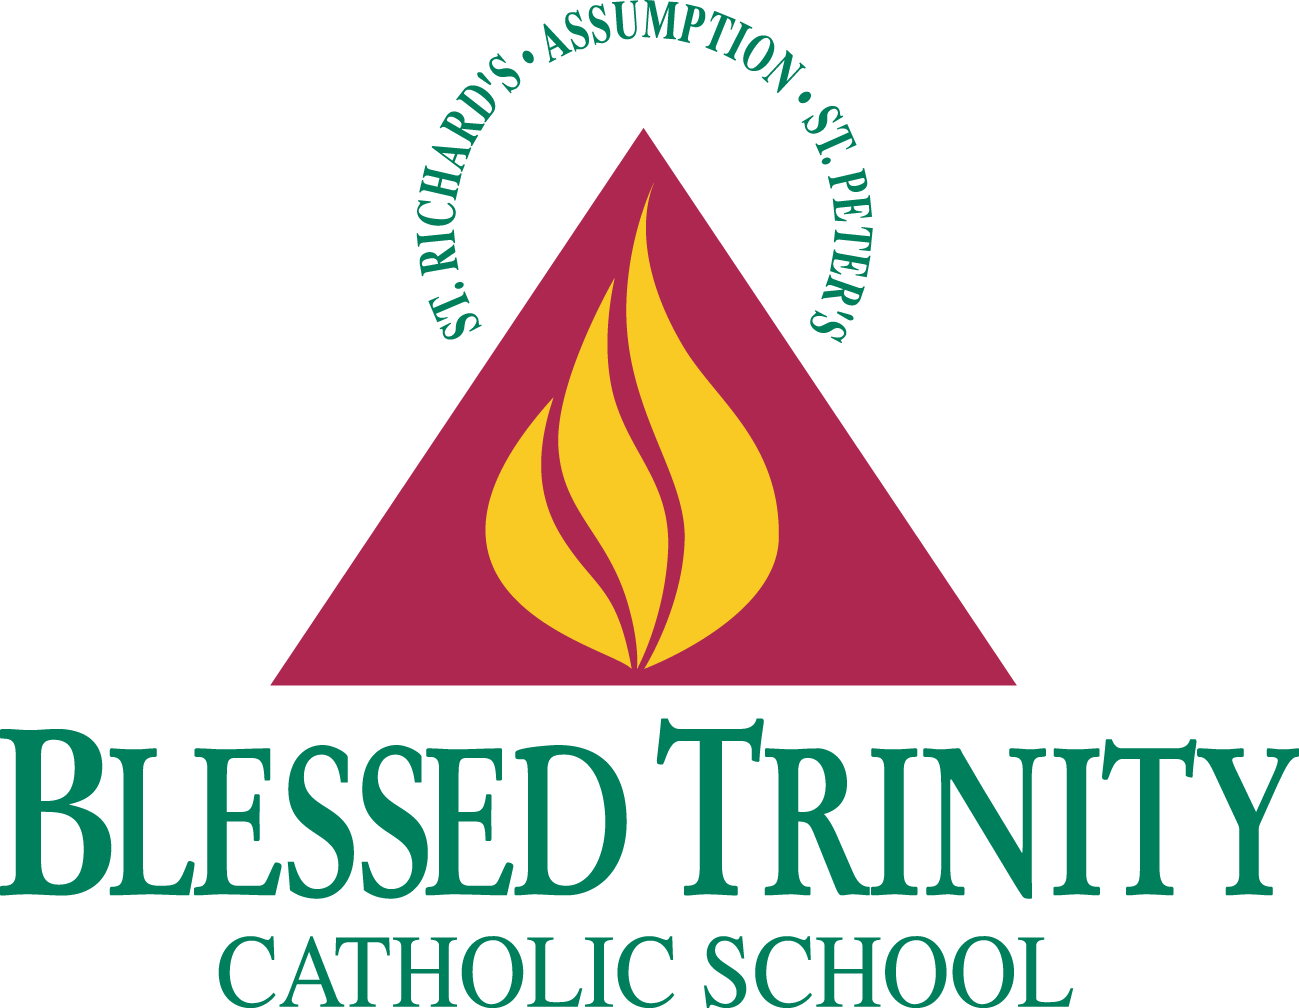 Btlogo 3c - Blessed Trinity Catholic School, Hd Png Download